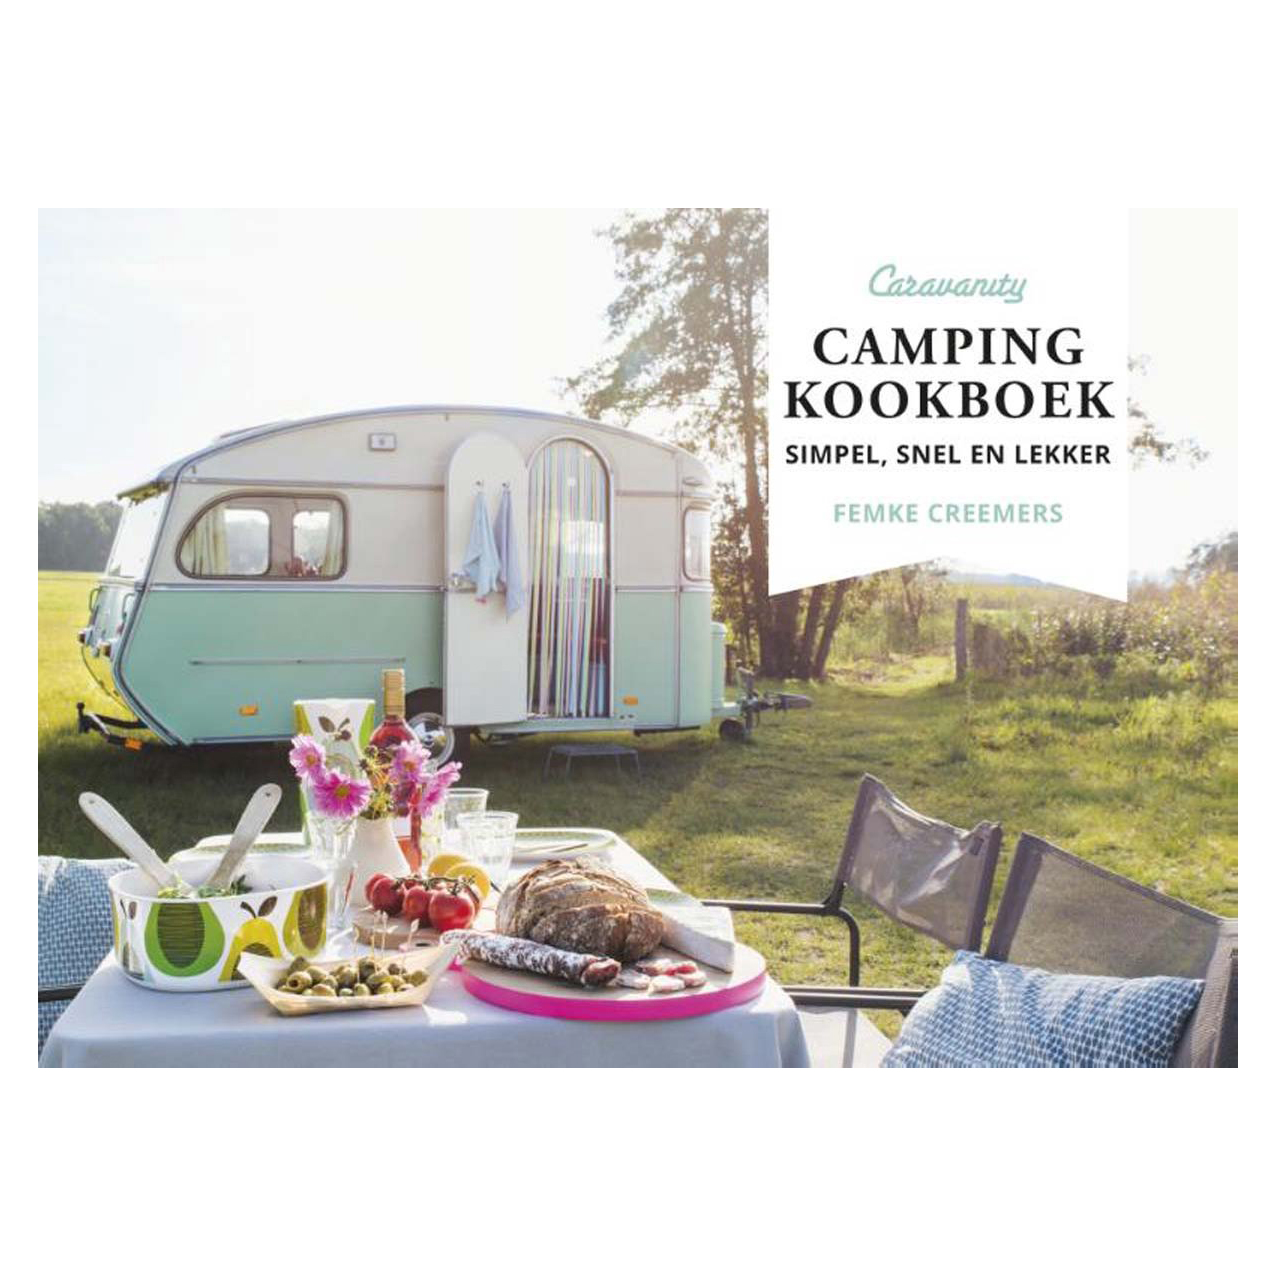 caravanity-camping-kookboek-femke-creemers